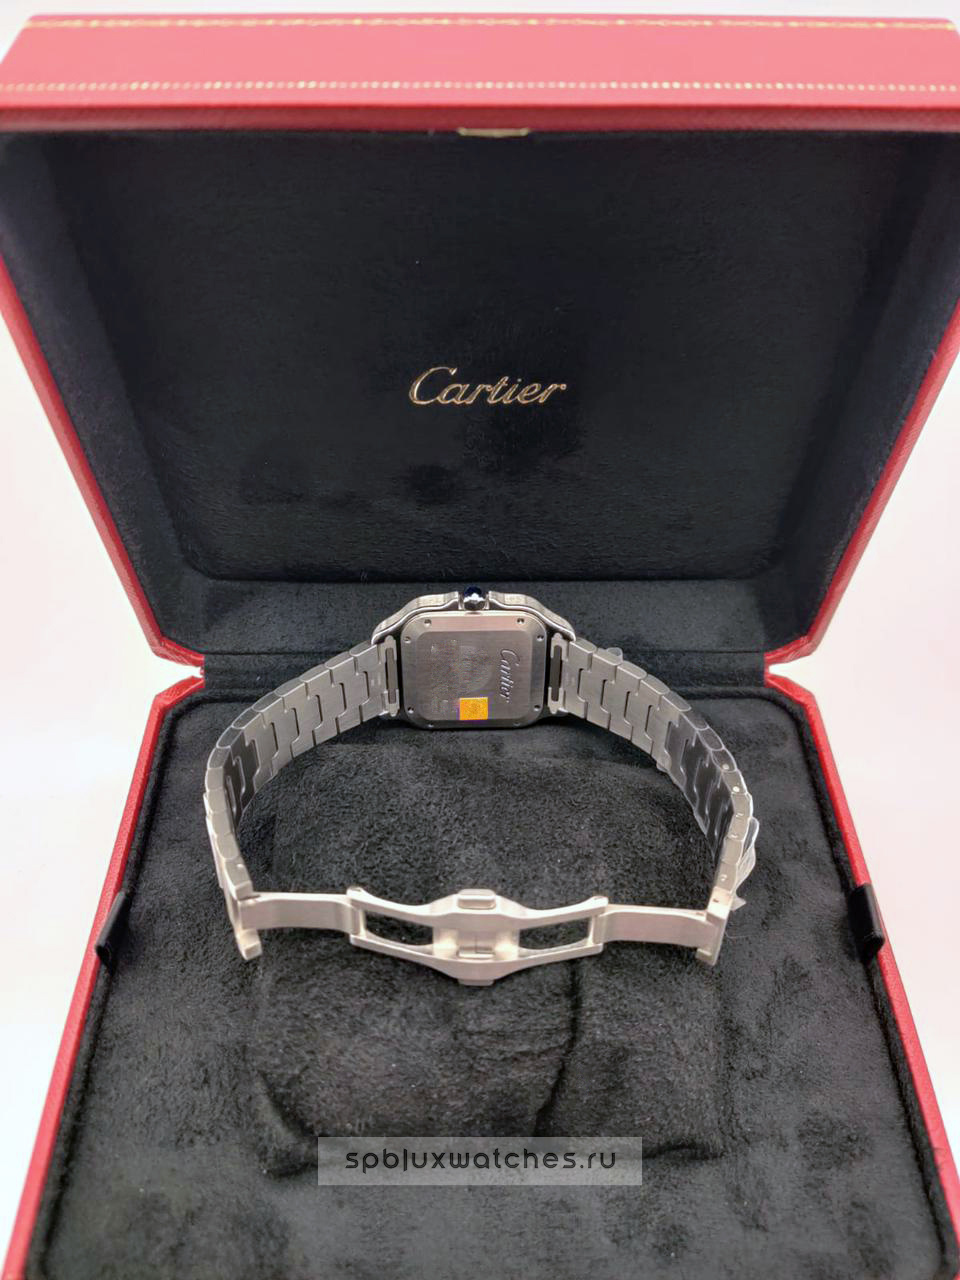 Cartier Santos De Cartier W2SA0016